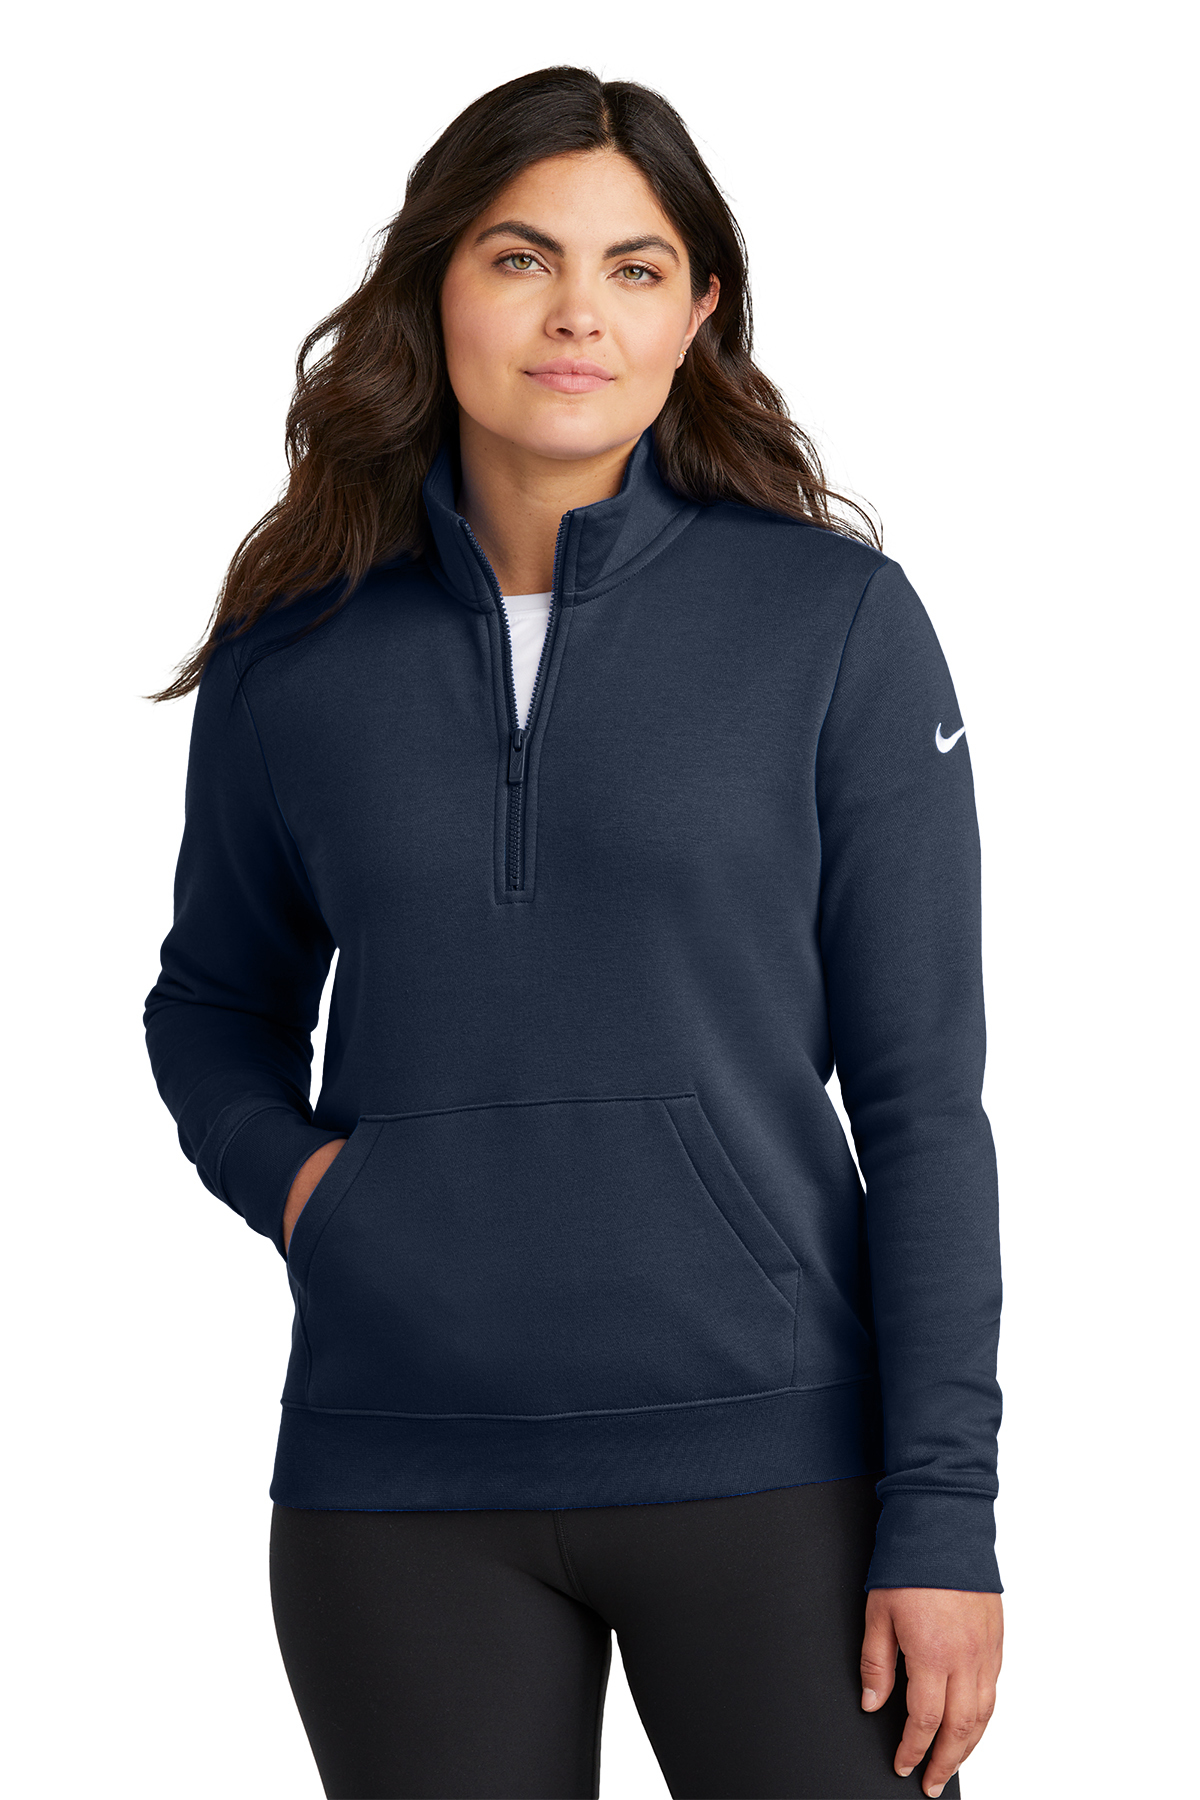 Nike Womens Running Swoosh 1/4 Zip Top Sweatshirt Black Gym Sportwear